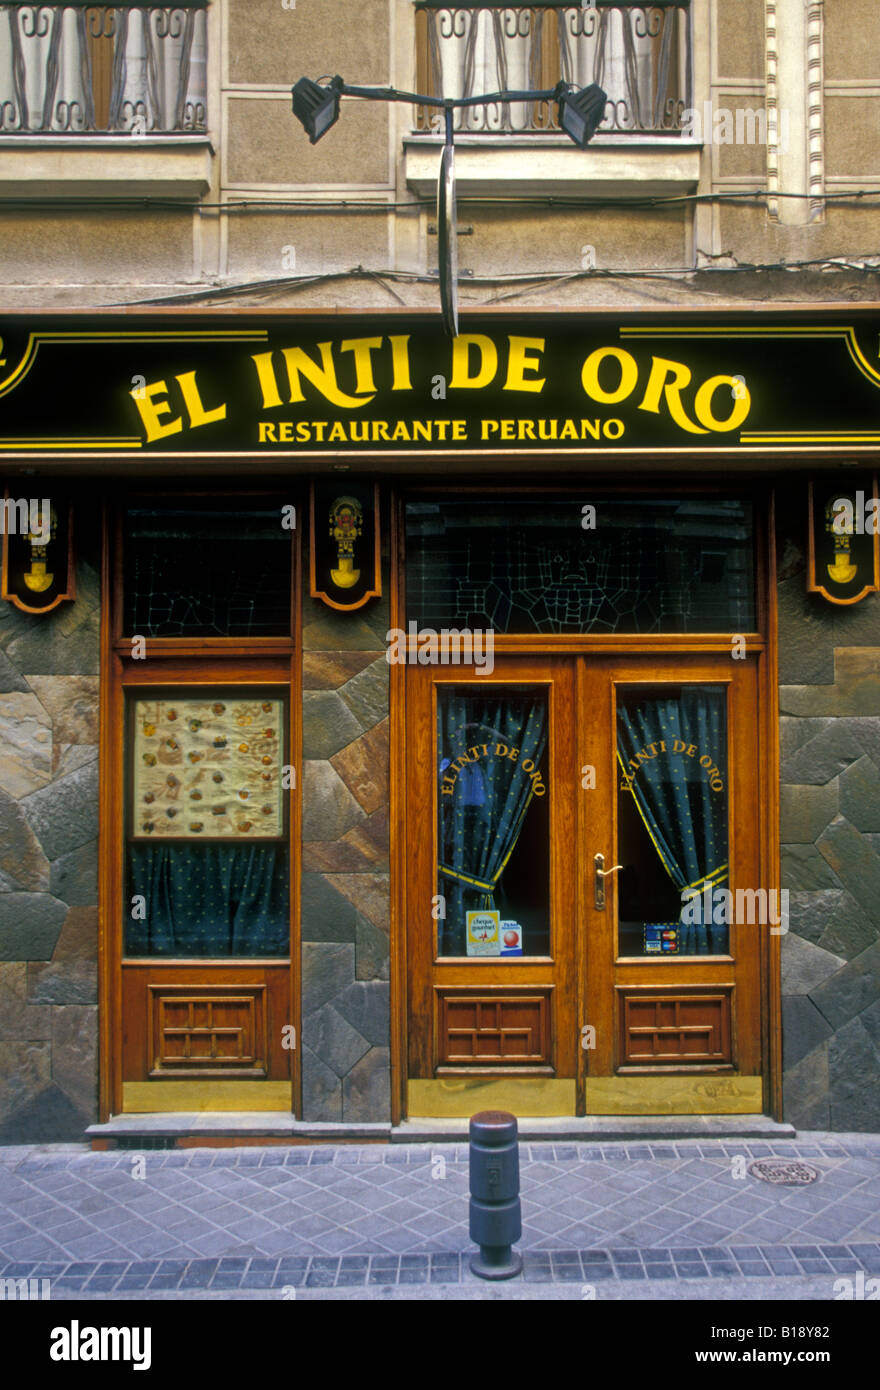 El Inti de Oro, Restaurant, peruanische Restaurant, Peruanisches Essen und Trinken, Essen und Trinken, die peruanische Küche, Provinz Madrid Madrid Spanien Europa Stockfoto